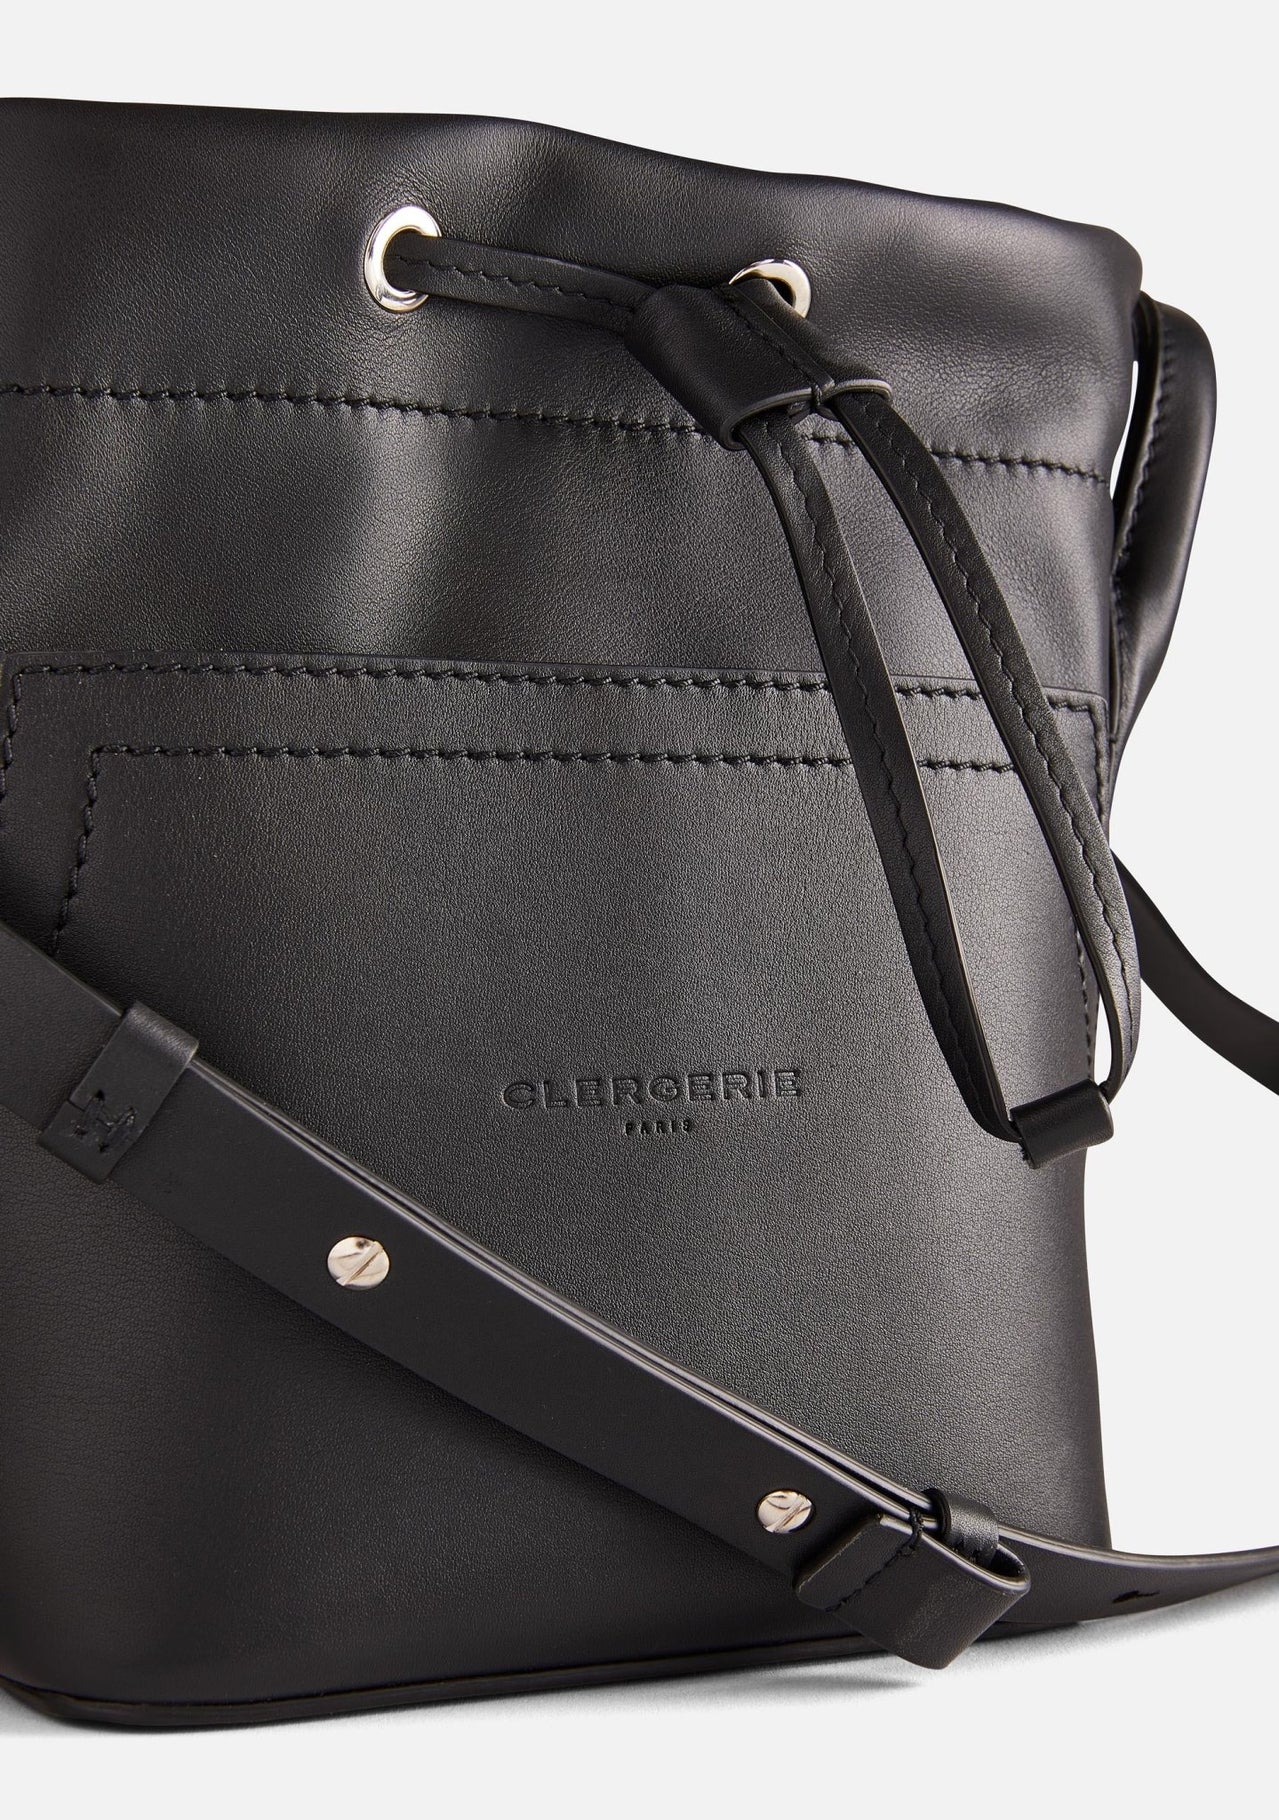 CL Crossbody Leather Bag With Adjustable Strap Black Crossbody Bag Purse